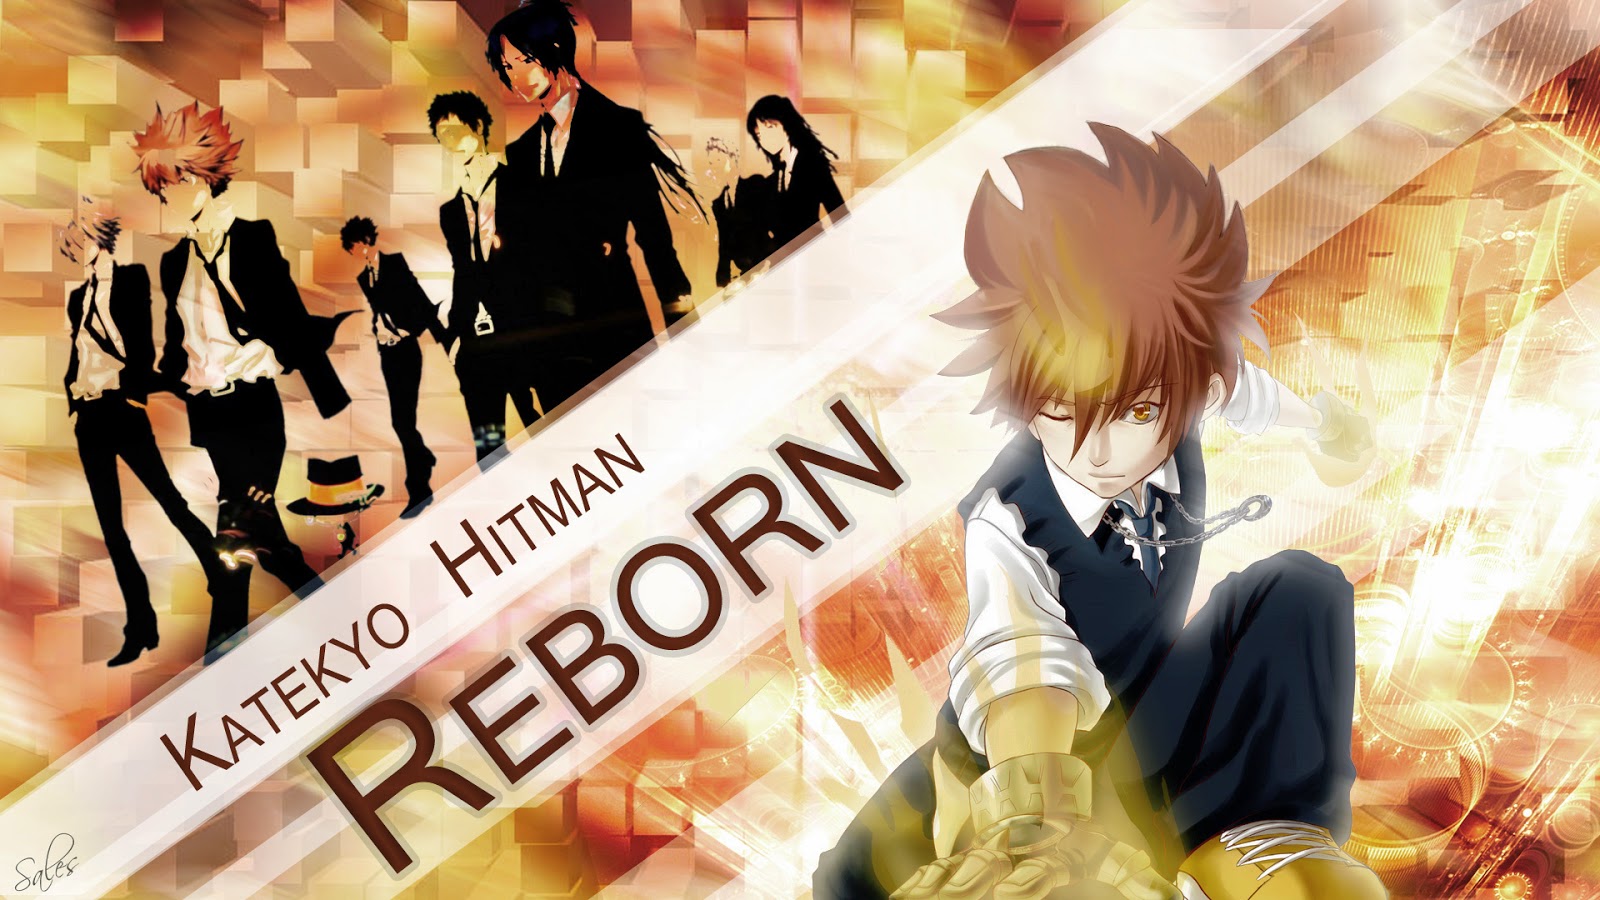 Download Anime Katekyo Hitman Reborn Completed Episodes Mp4 Anime Series Downloader